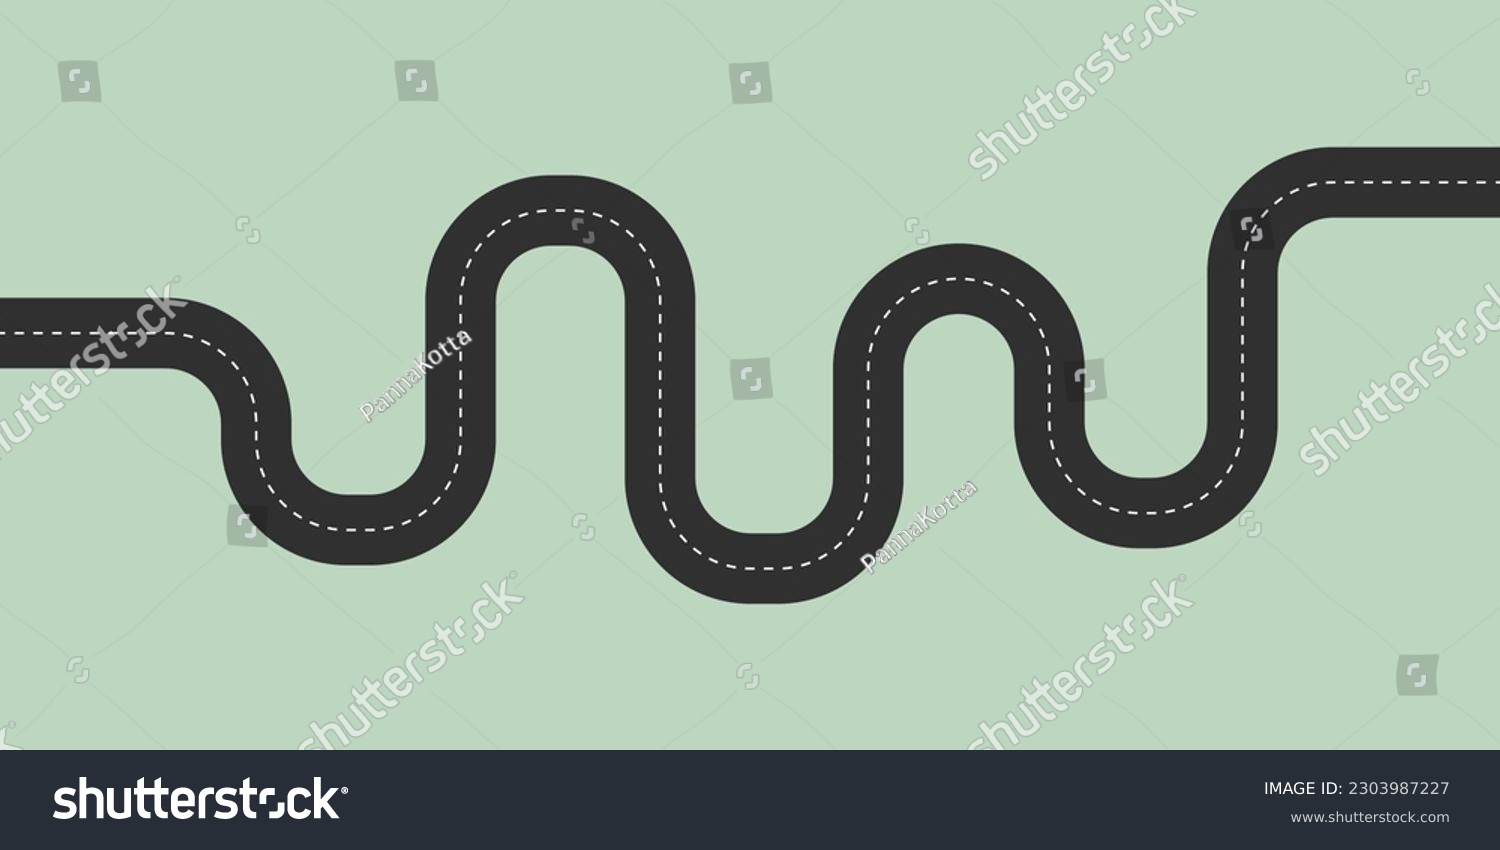 SVG of Winding road on white background. Vector illustration graphic design svg